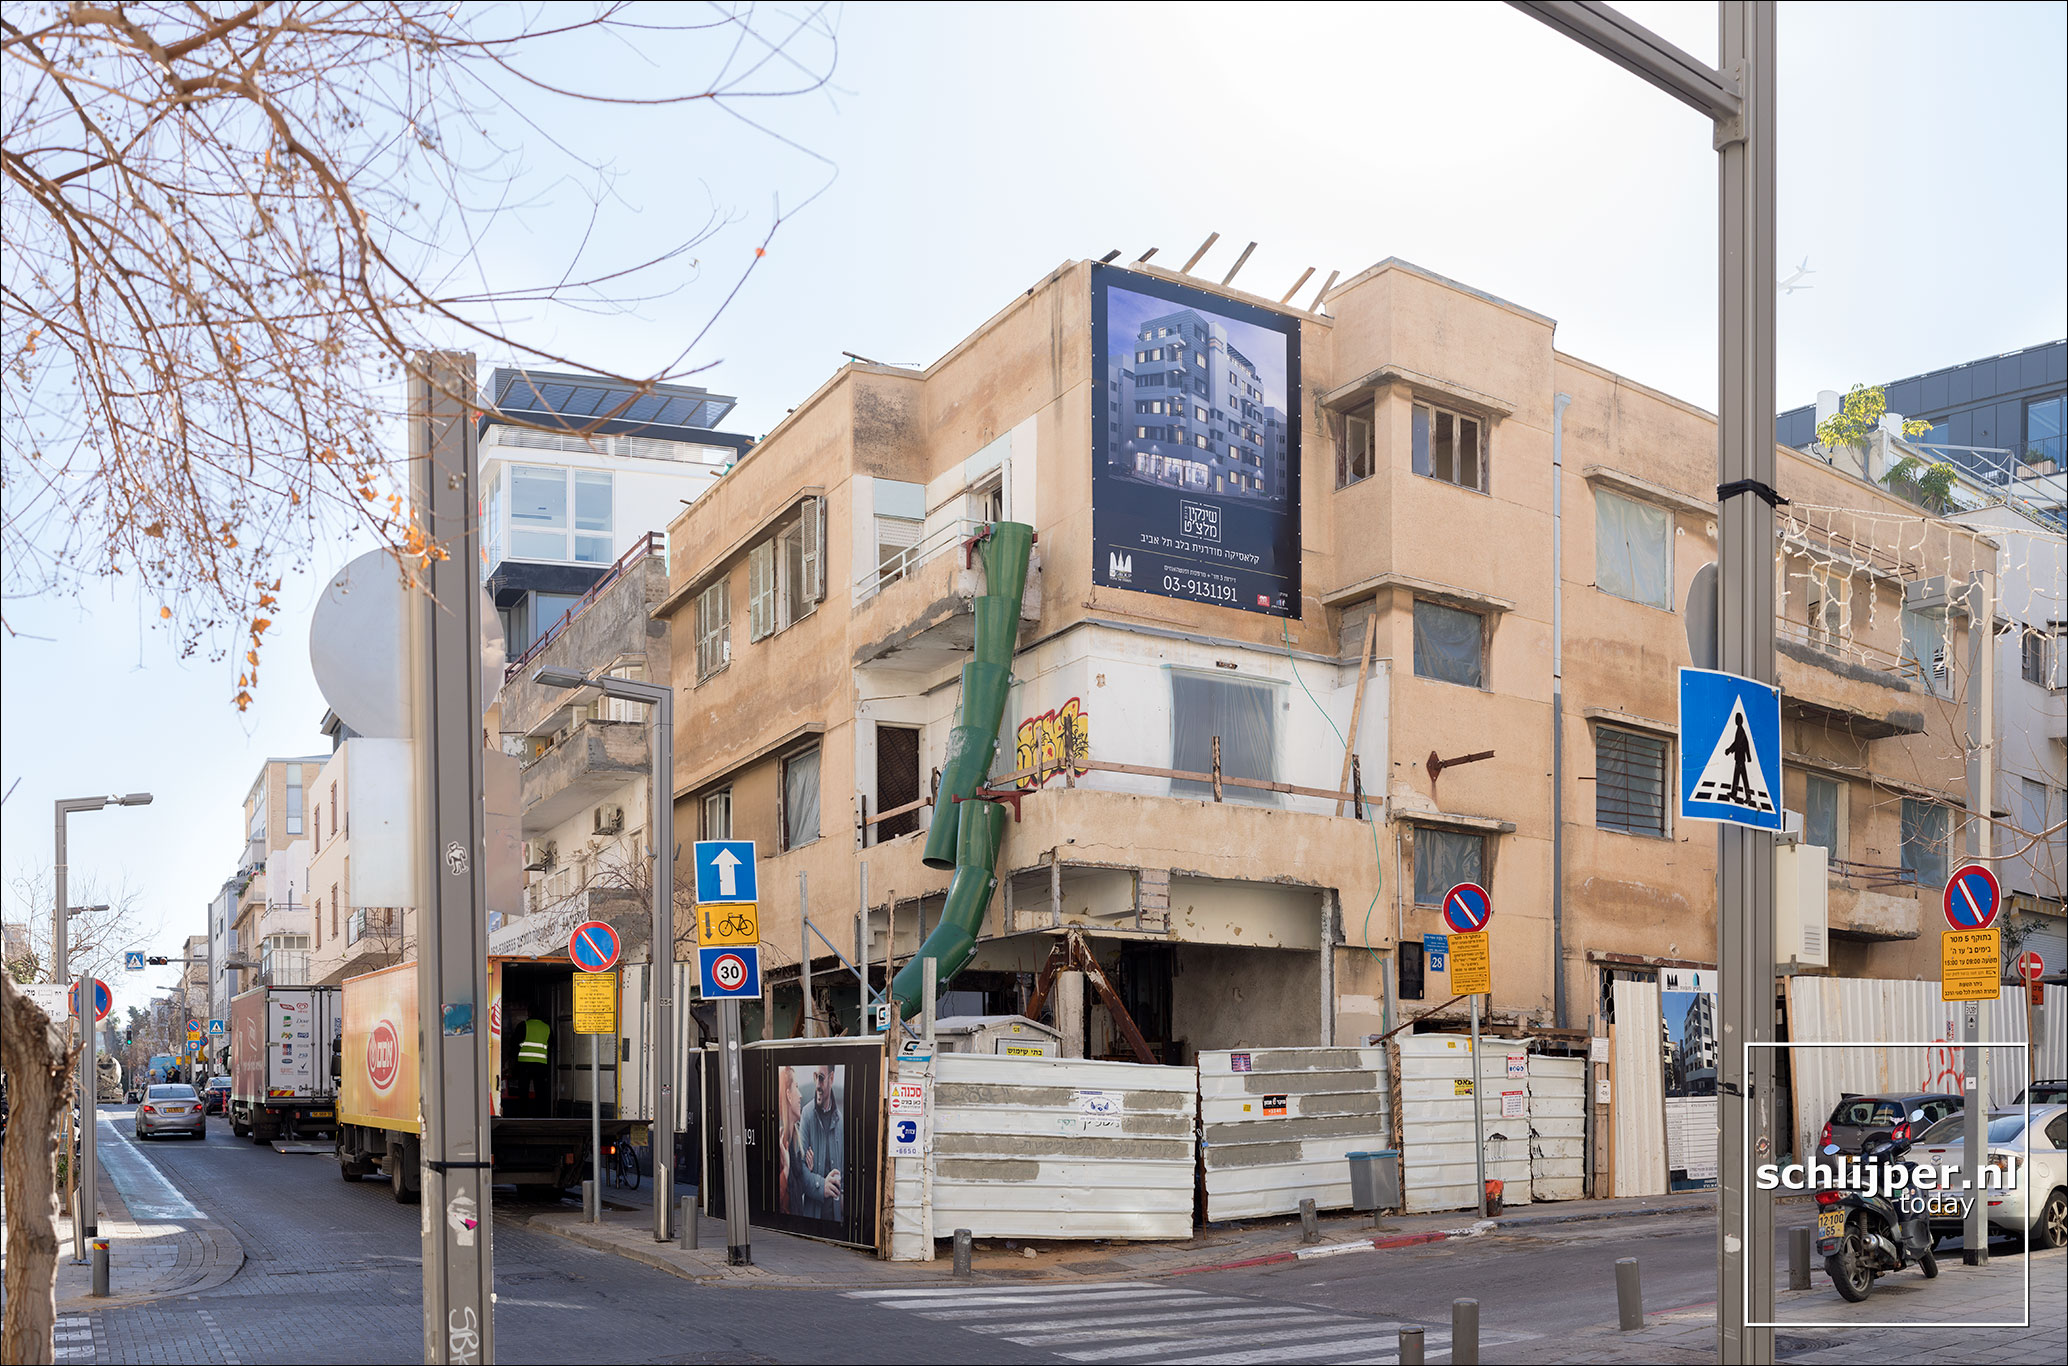 Israel, Tel Aviv, 3 februari 2019